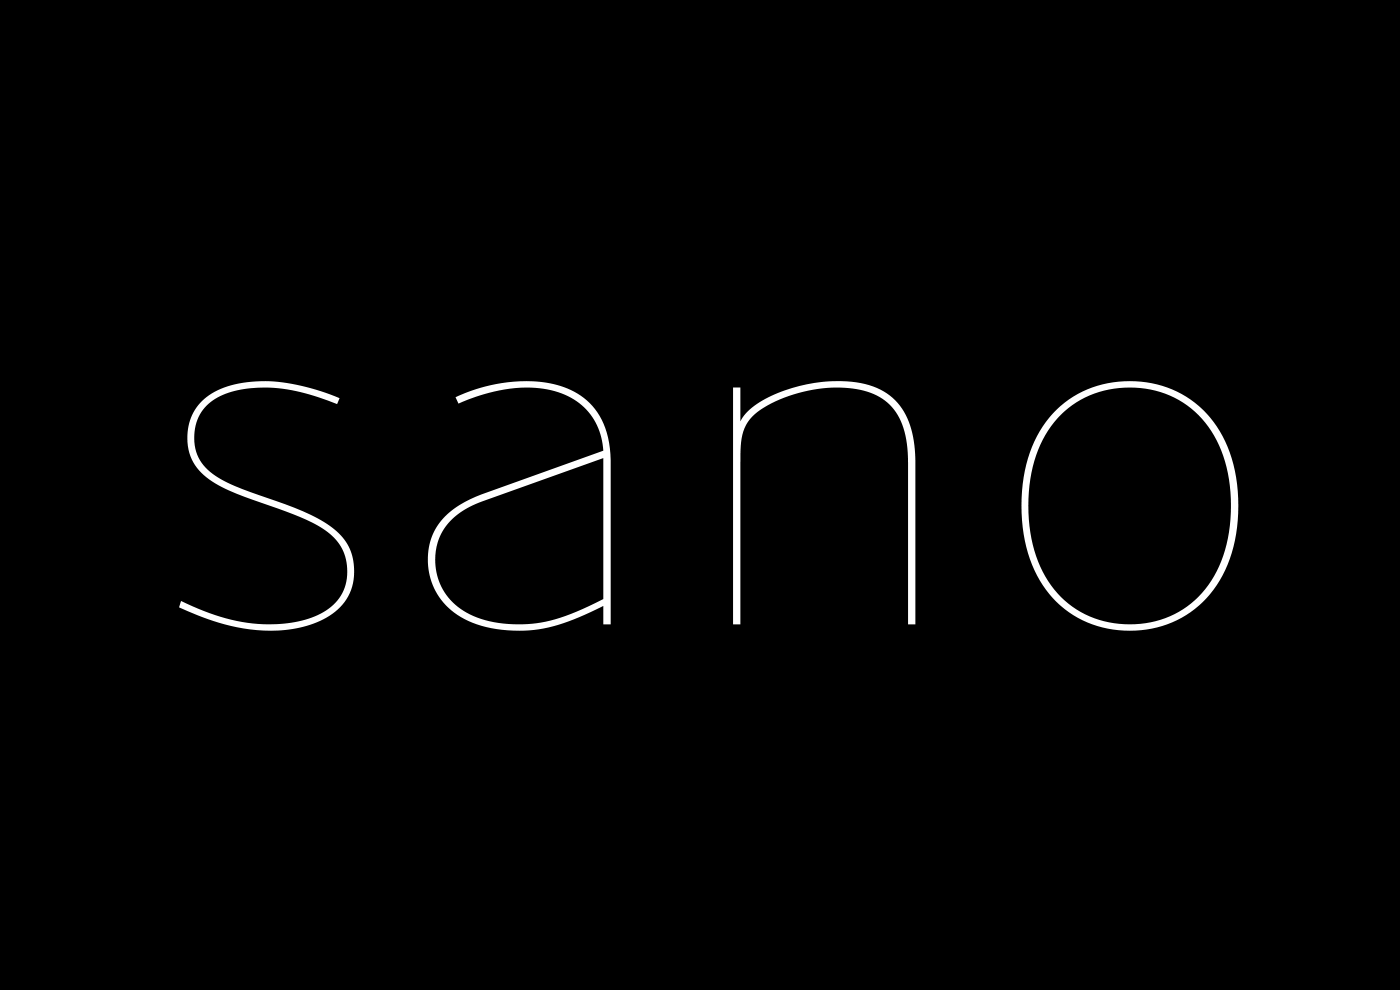 Typeface font Custom bespoke typography   angle